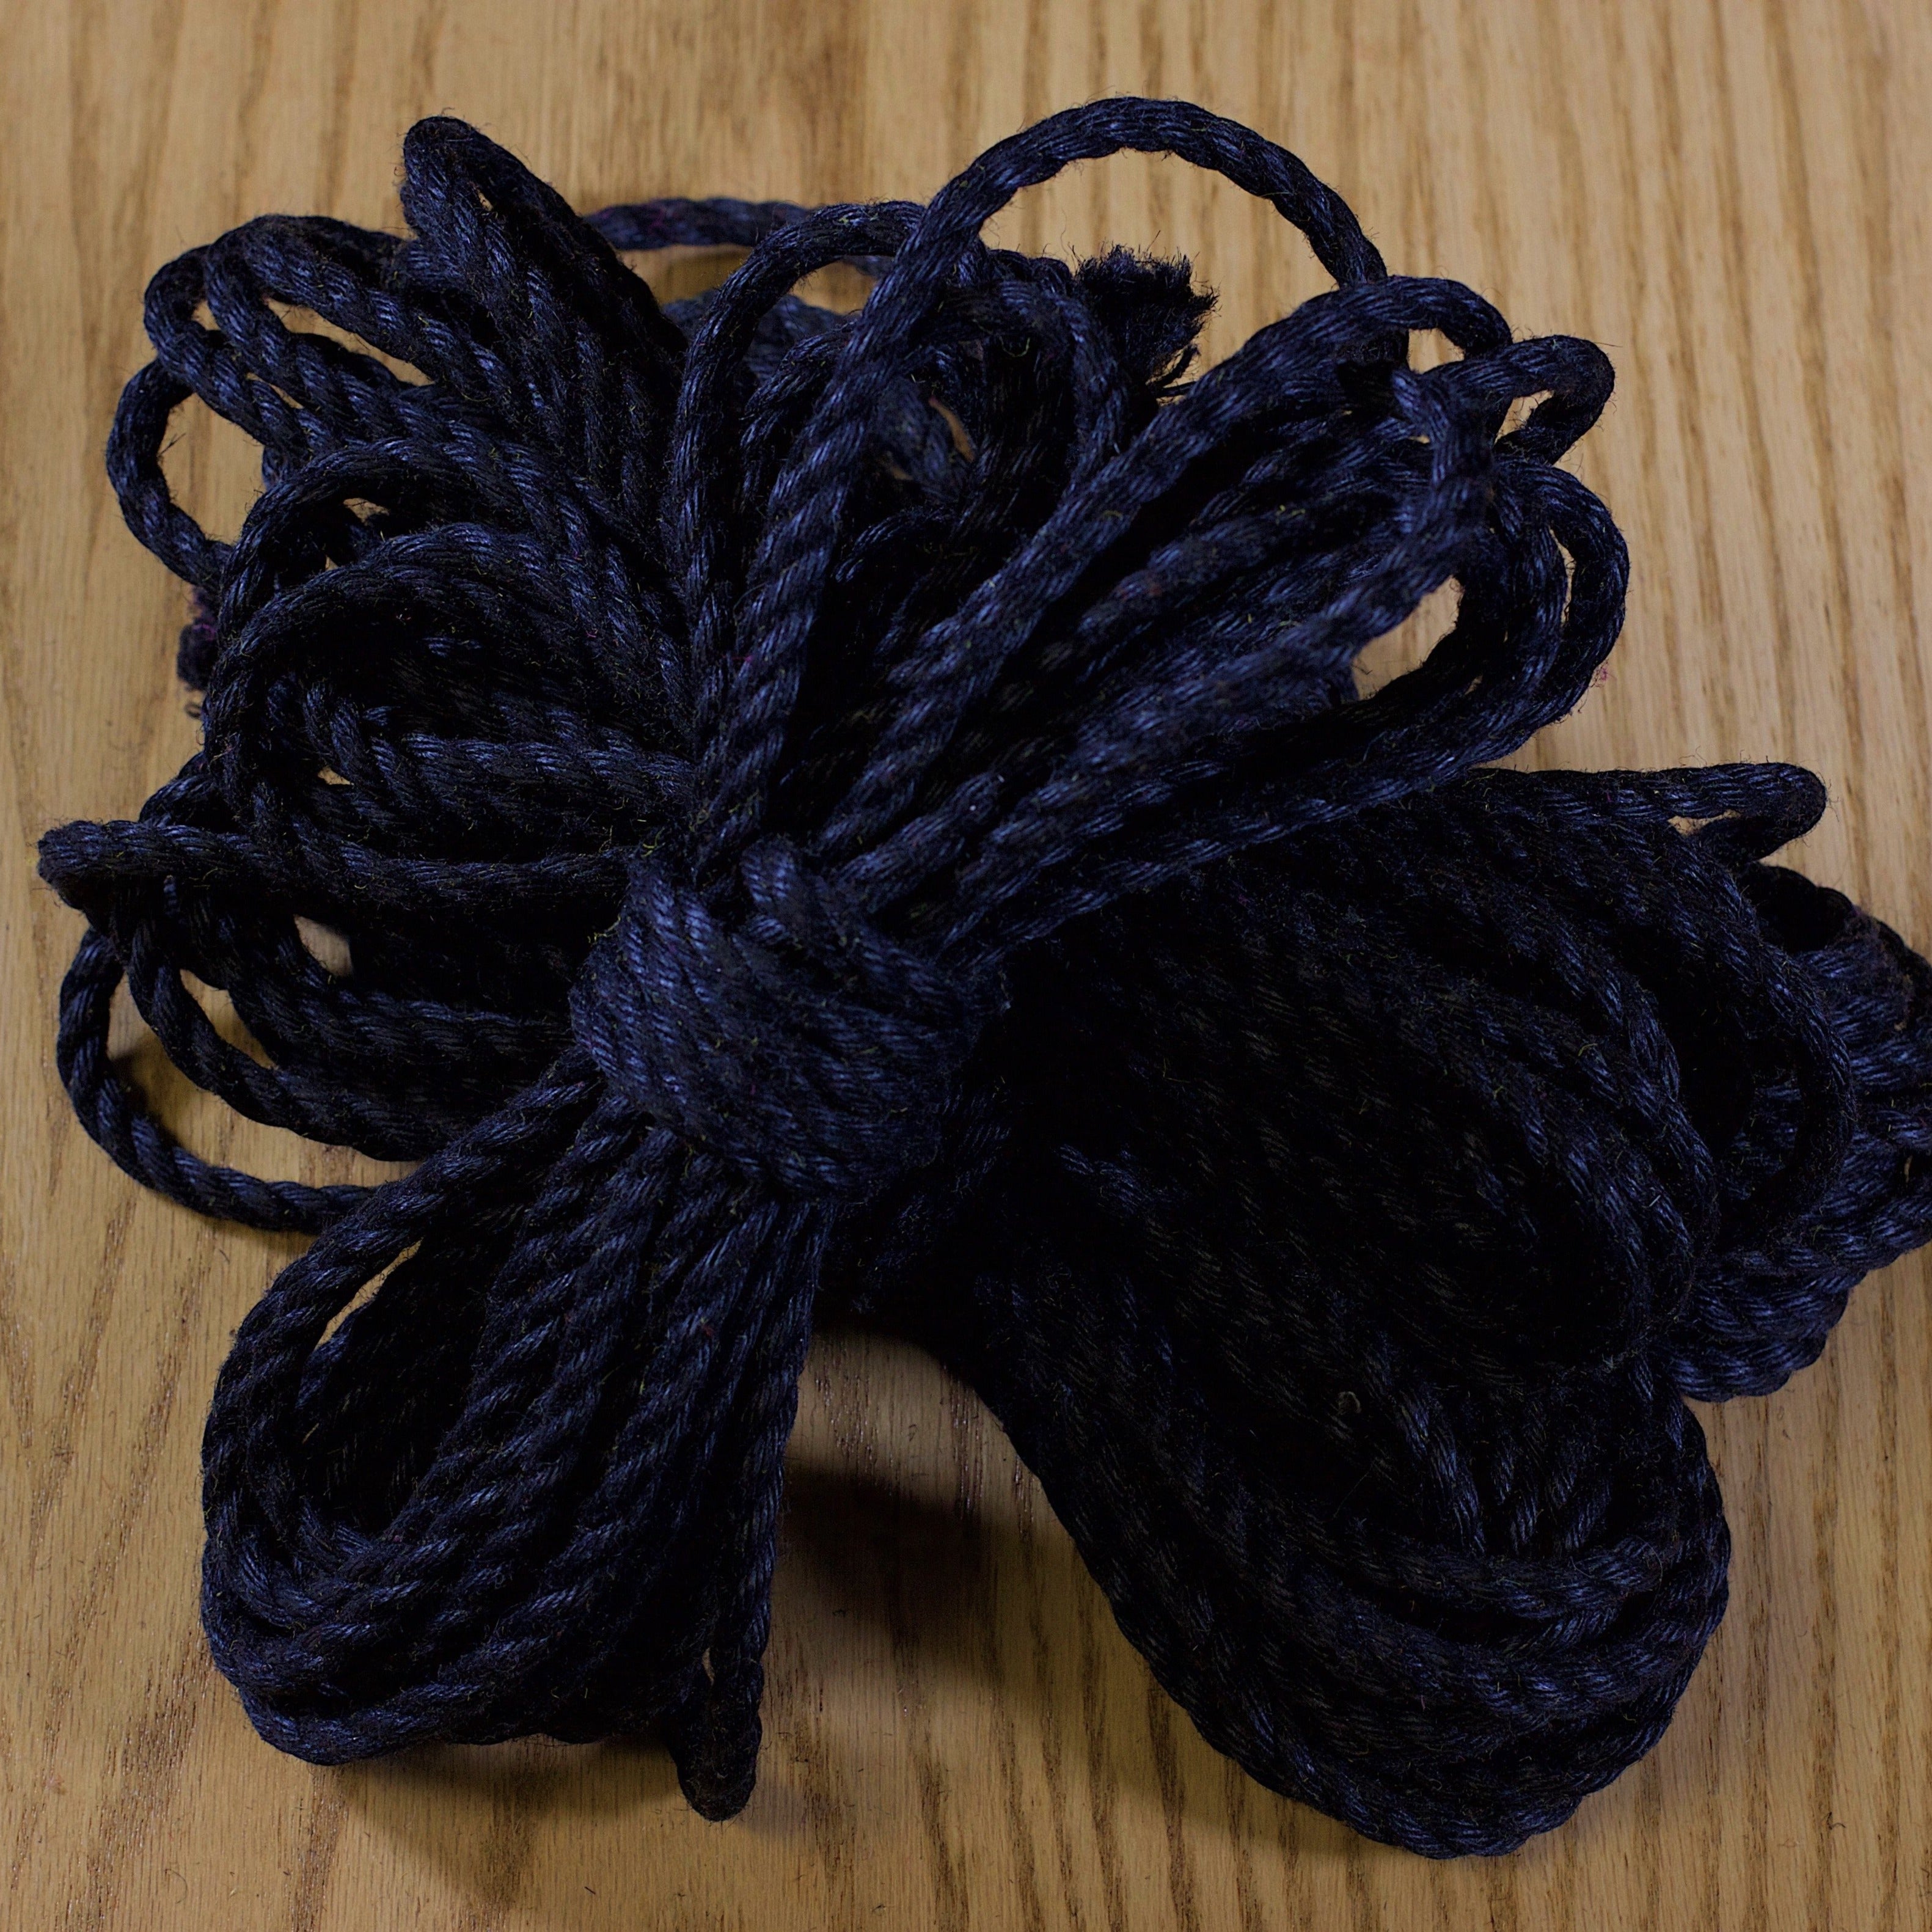 Shibari Rope. 1 Ply 'violet Fully Treated' Tossa Jute Rope. 8